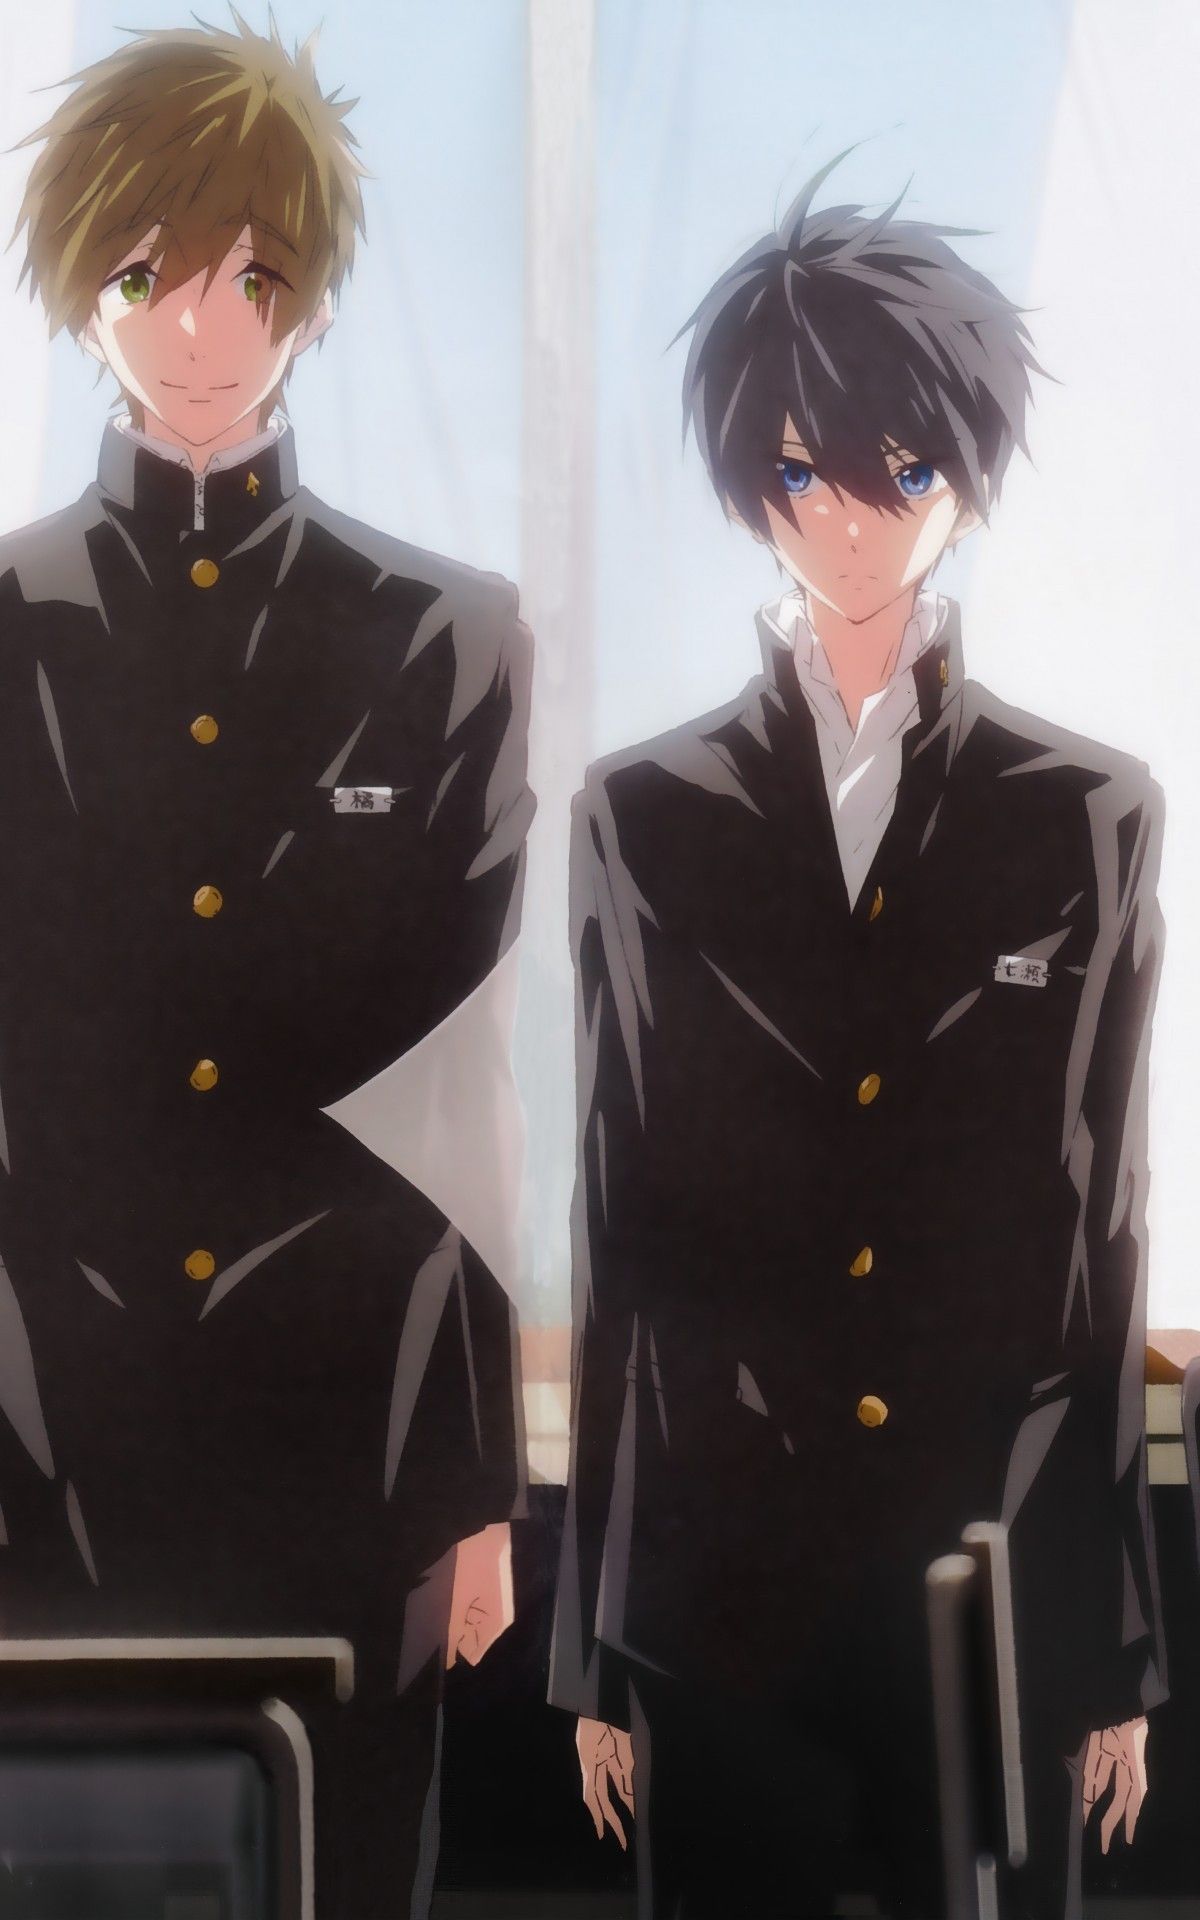 Download 1200x1920 Anime Guys, Boy School Uniform, Wallpaper